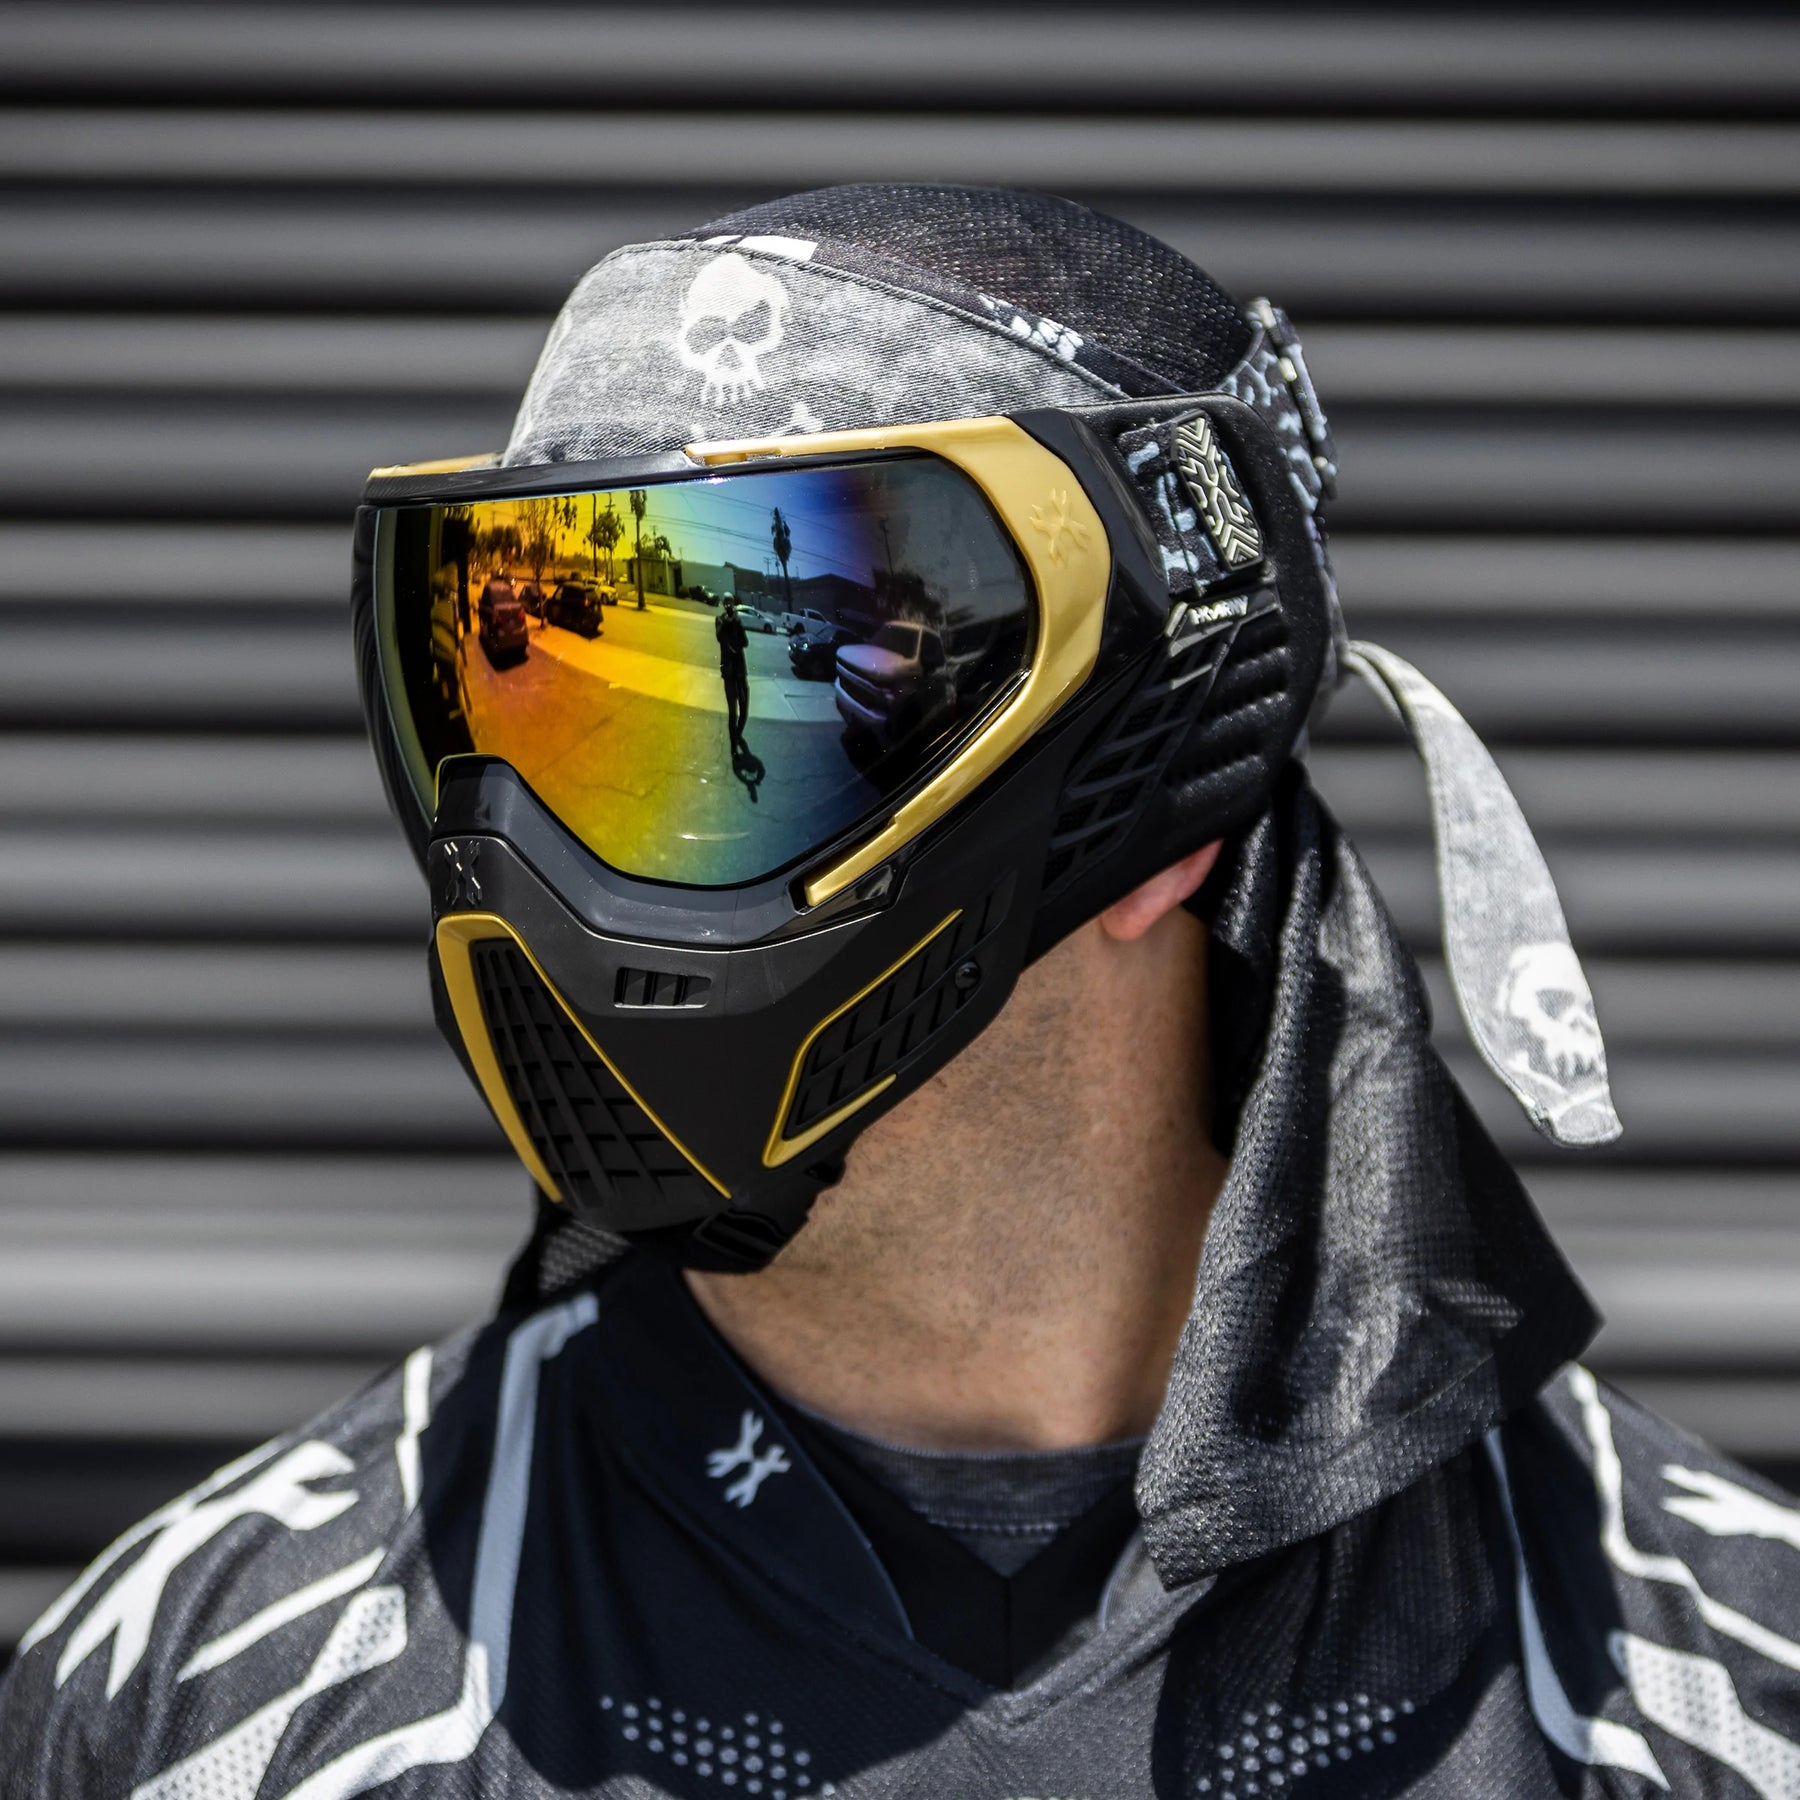 Klr Goggle Prestige - Black/Gold/Fusion Lens | Paintball Goggle | Mask | Hk Army